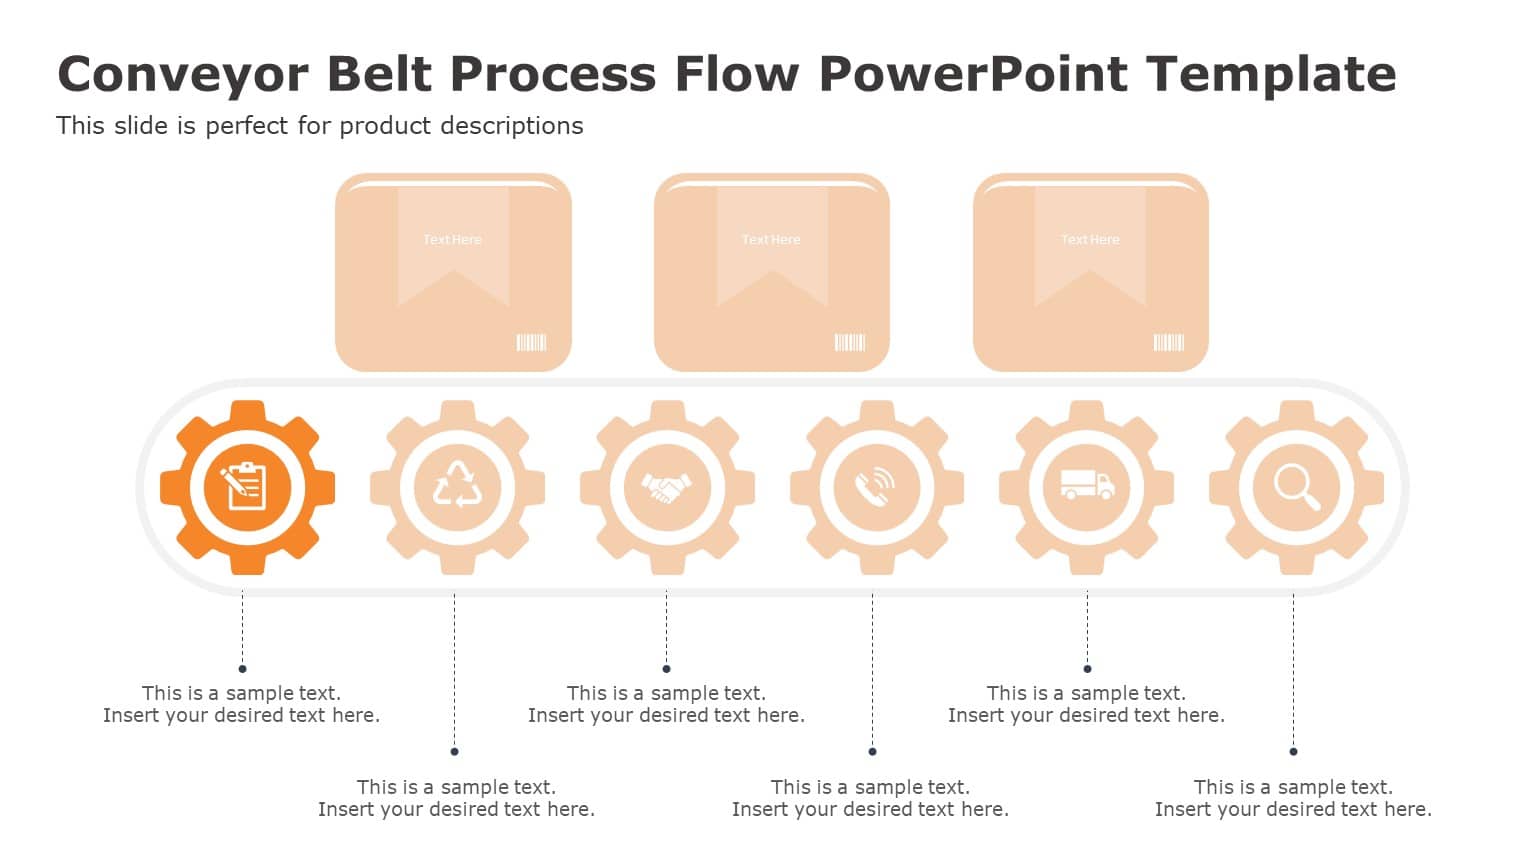 Conveyor Belt Process Flow PowerPoint Template 03 & Google Slides Theme